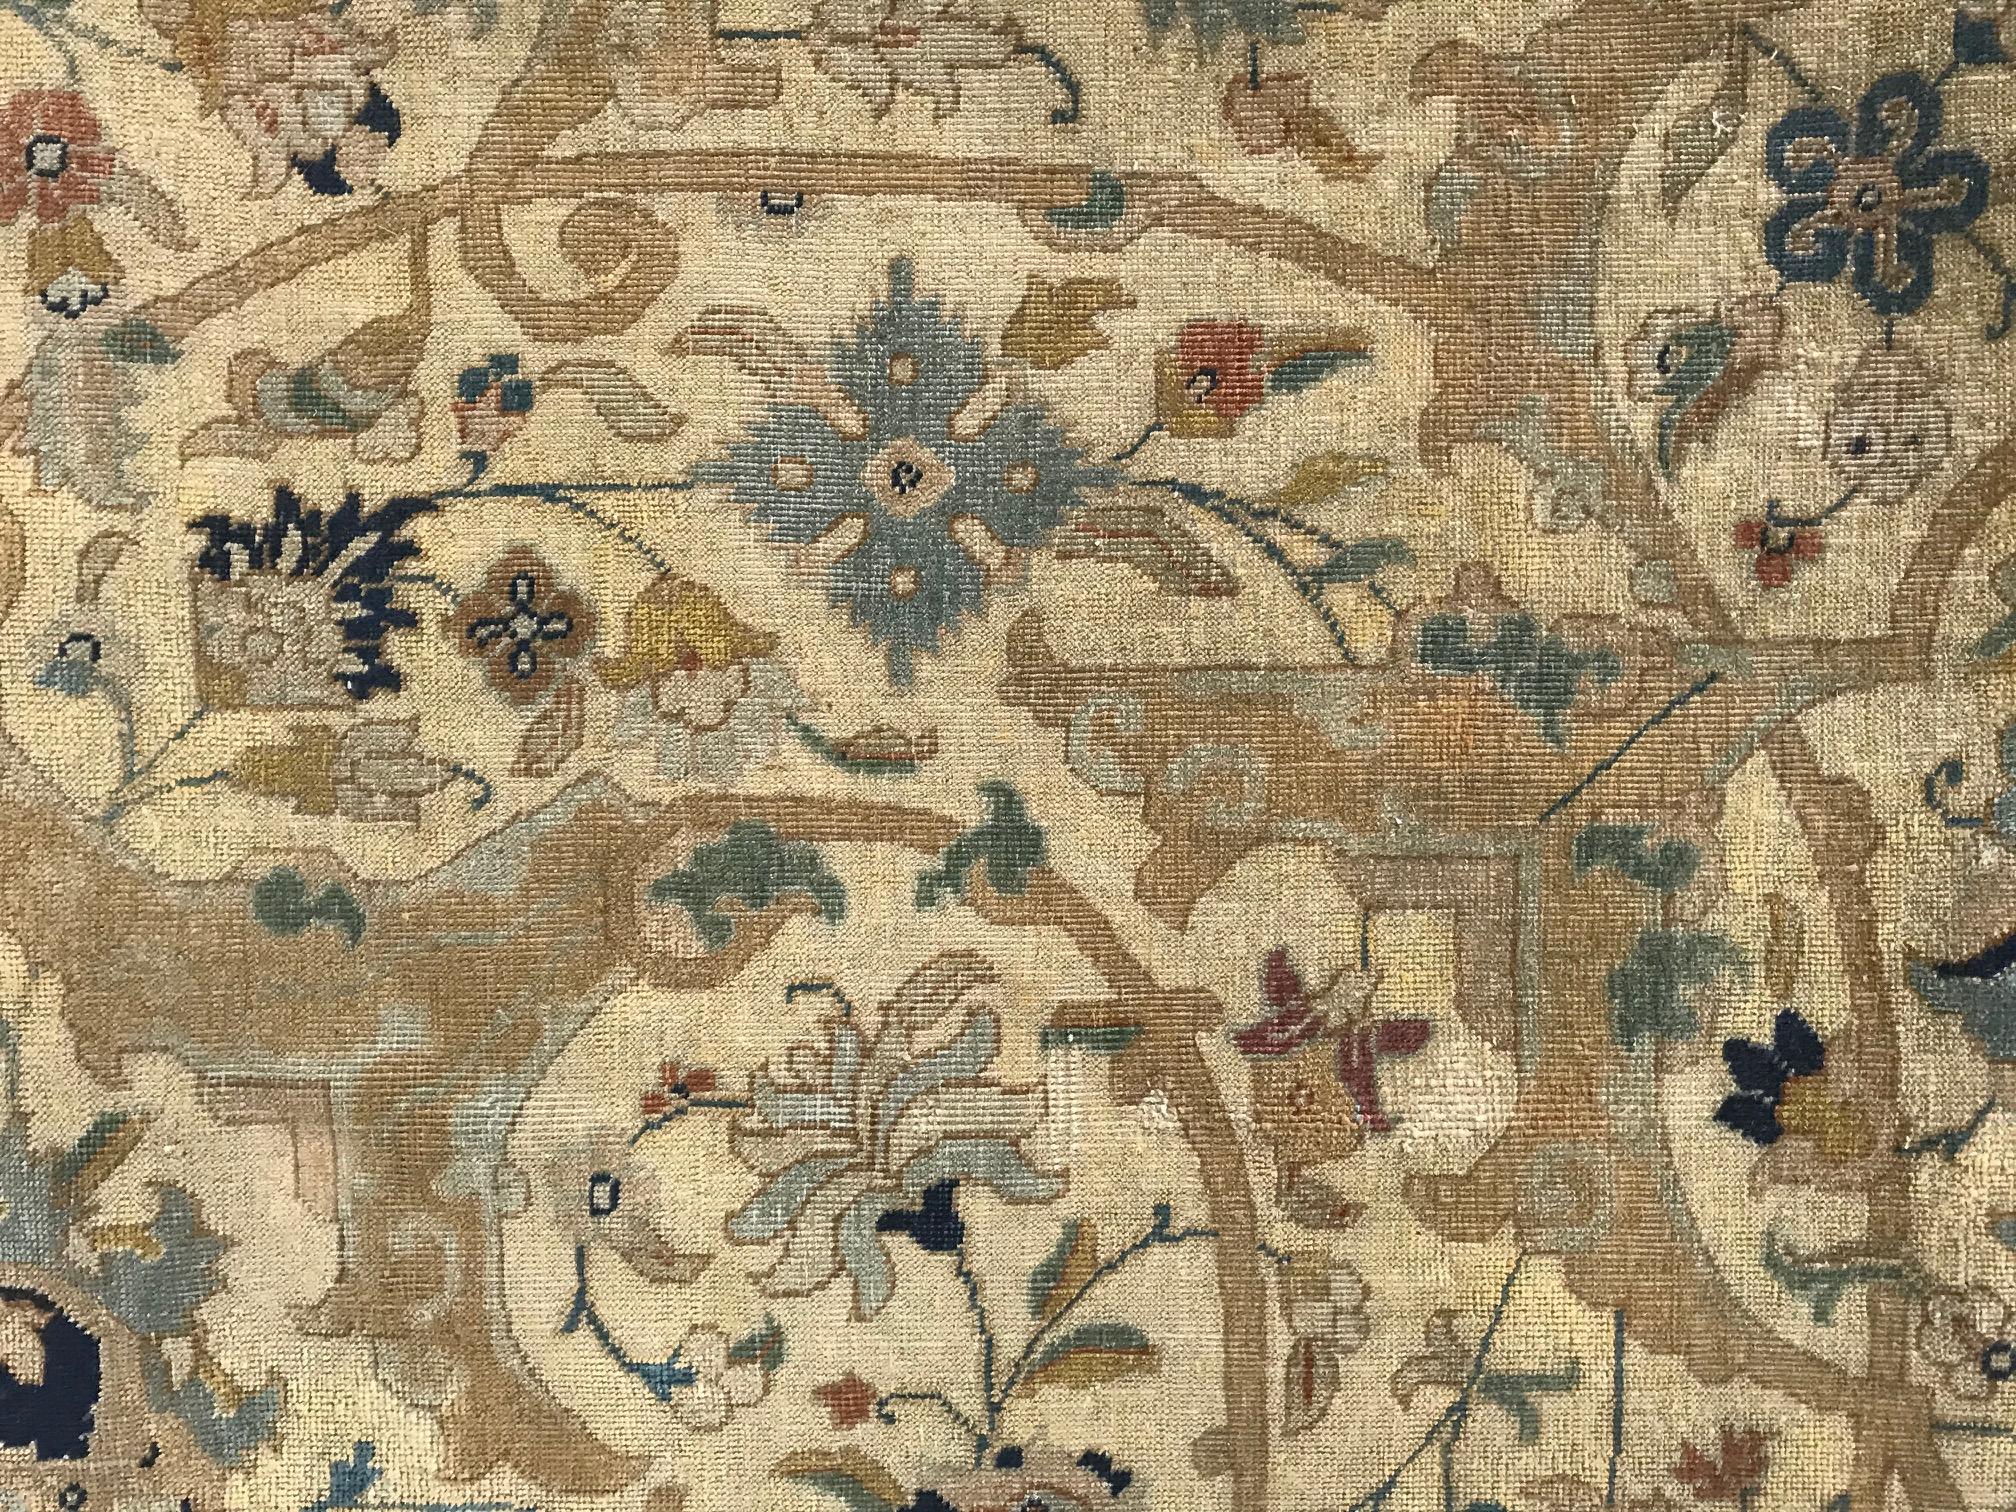 Antique Persian Tabriz botanic handwoven wool rug
Size: 9'3